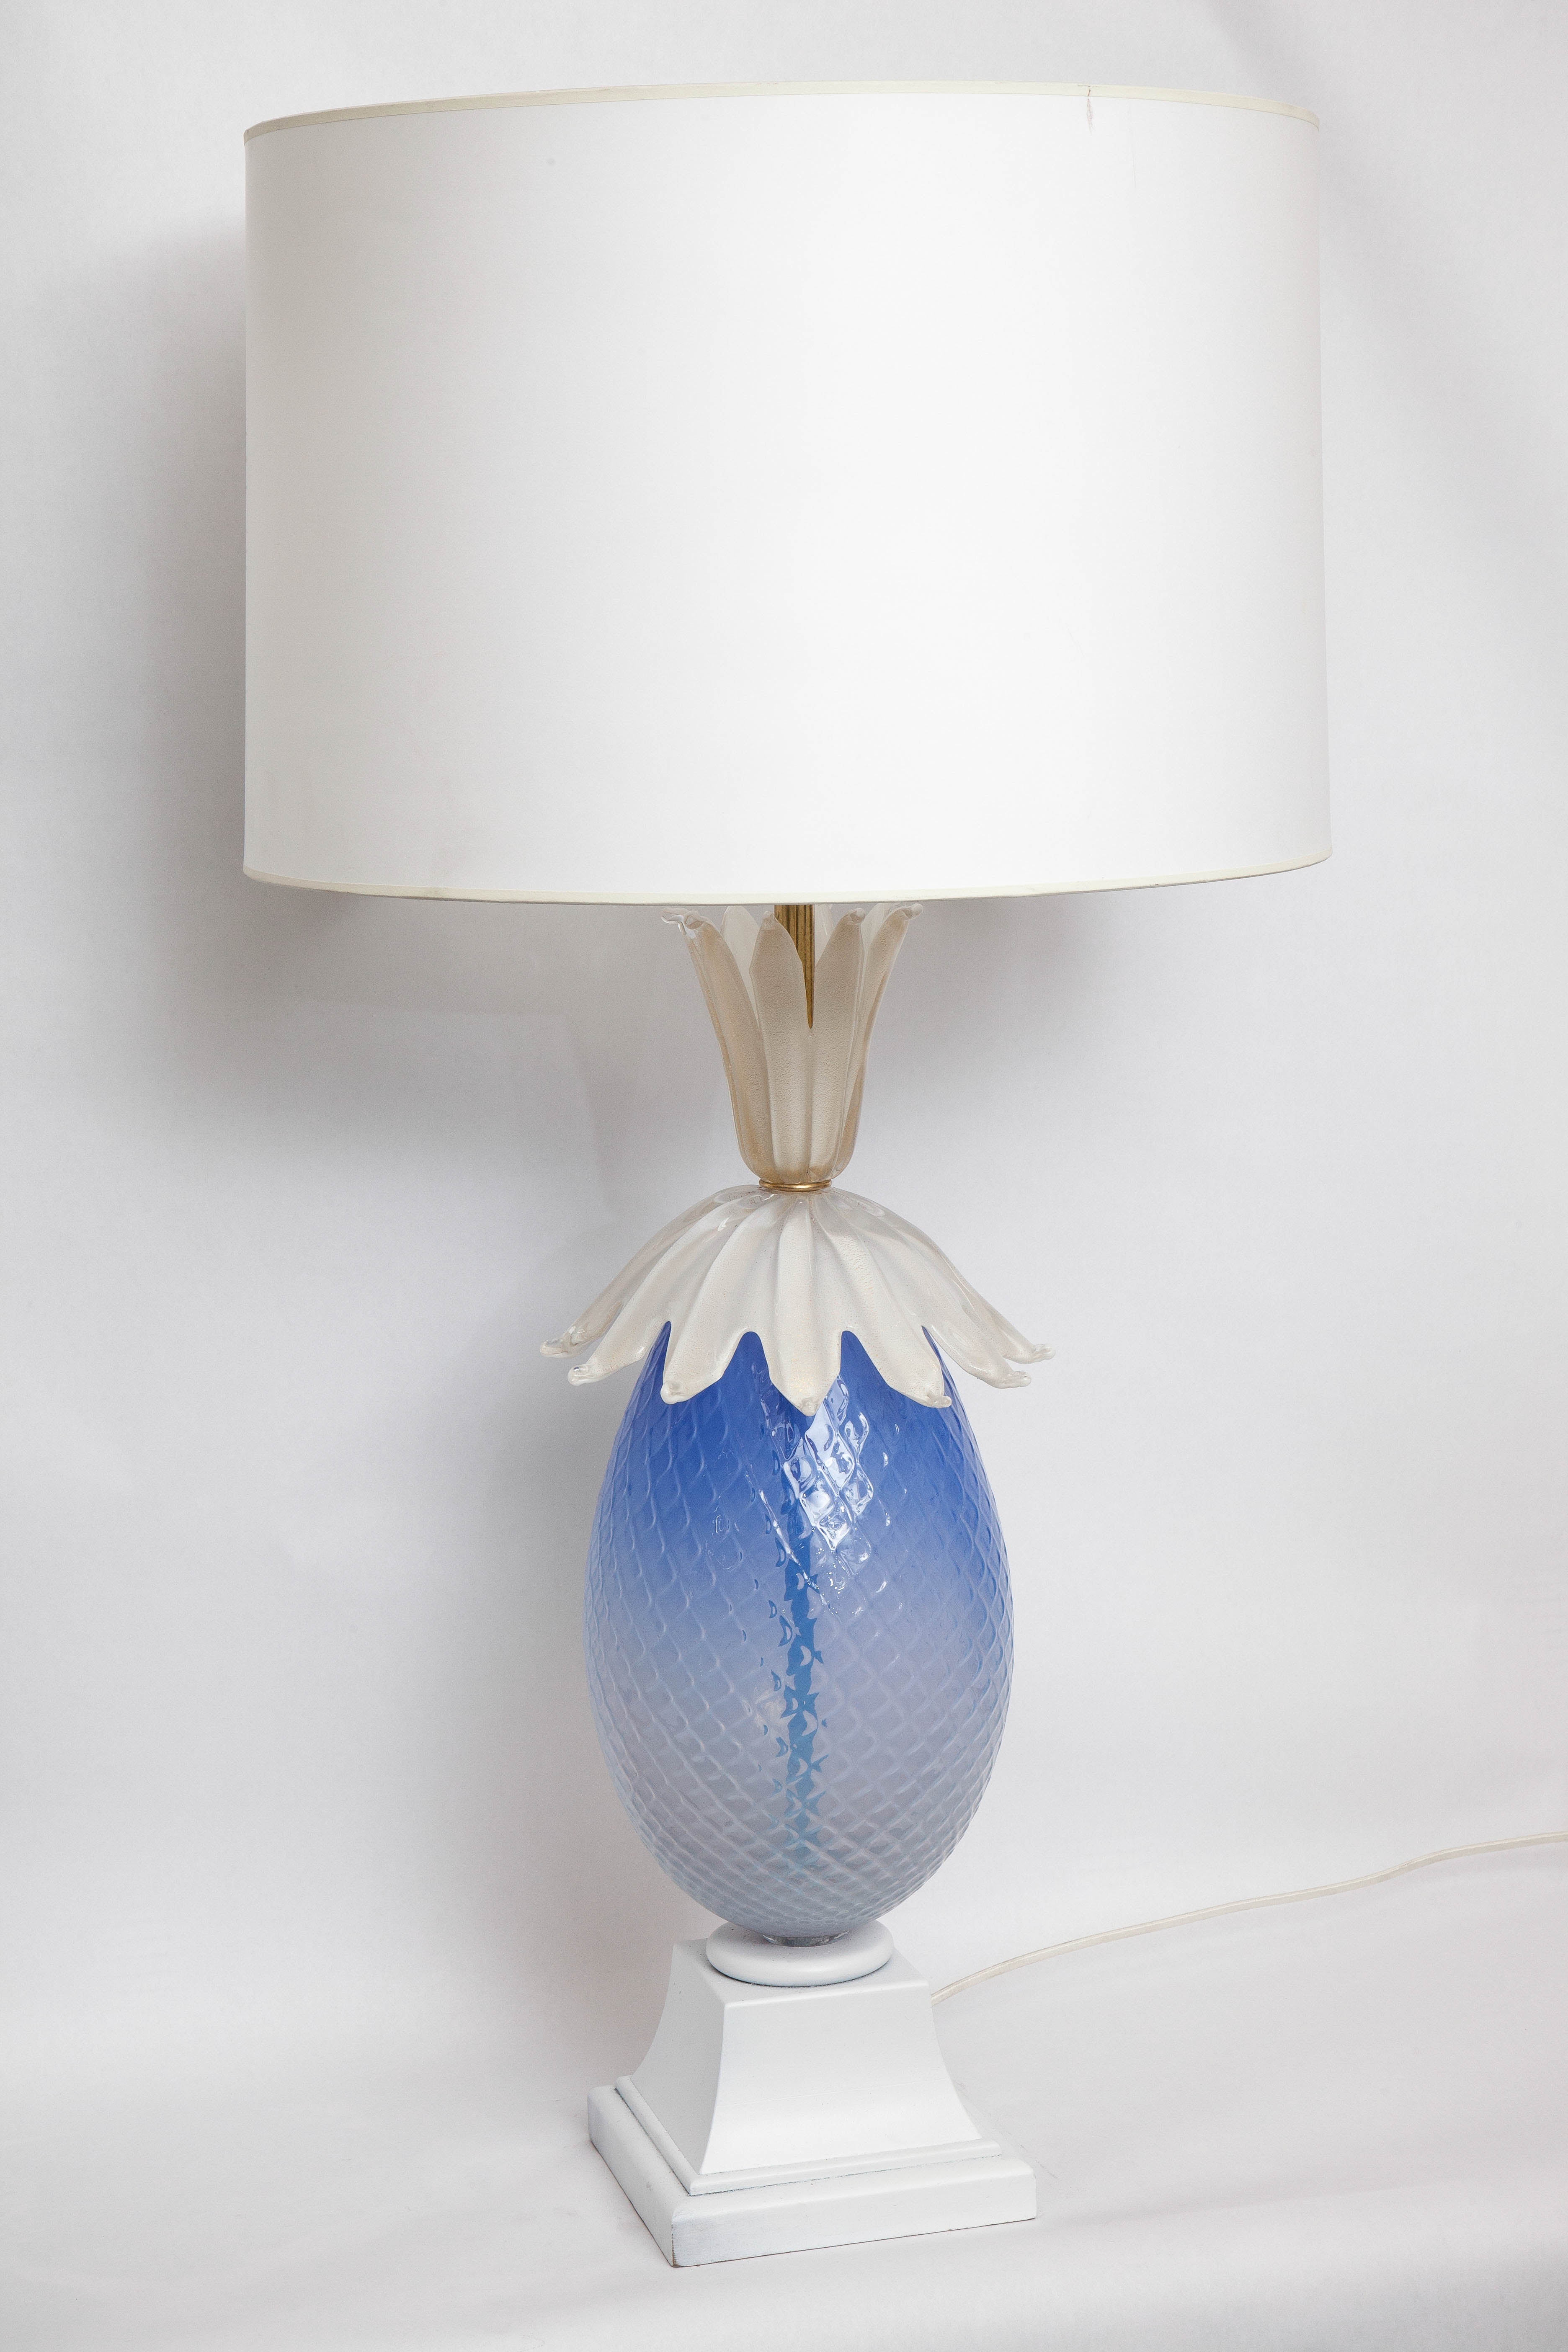 American  Martenuzzi Table Lamp Murano Glass Mid Century Modern Italy 1950's